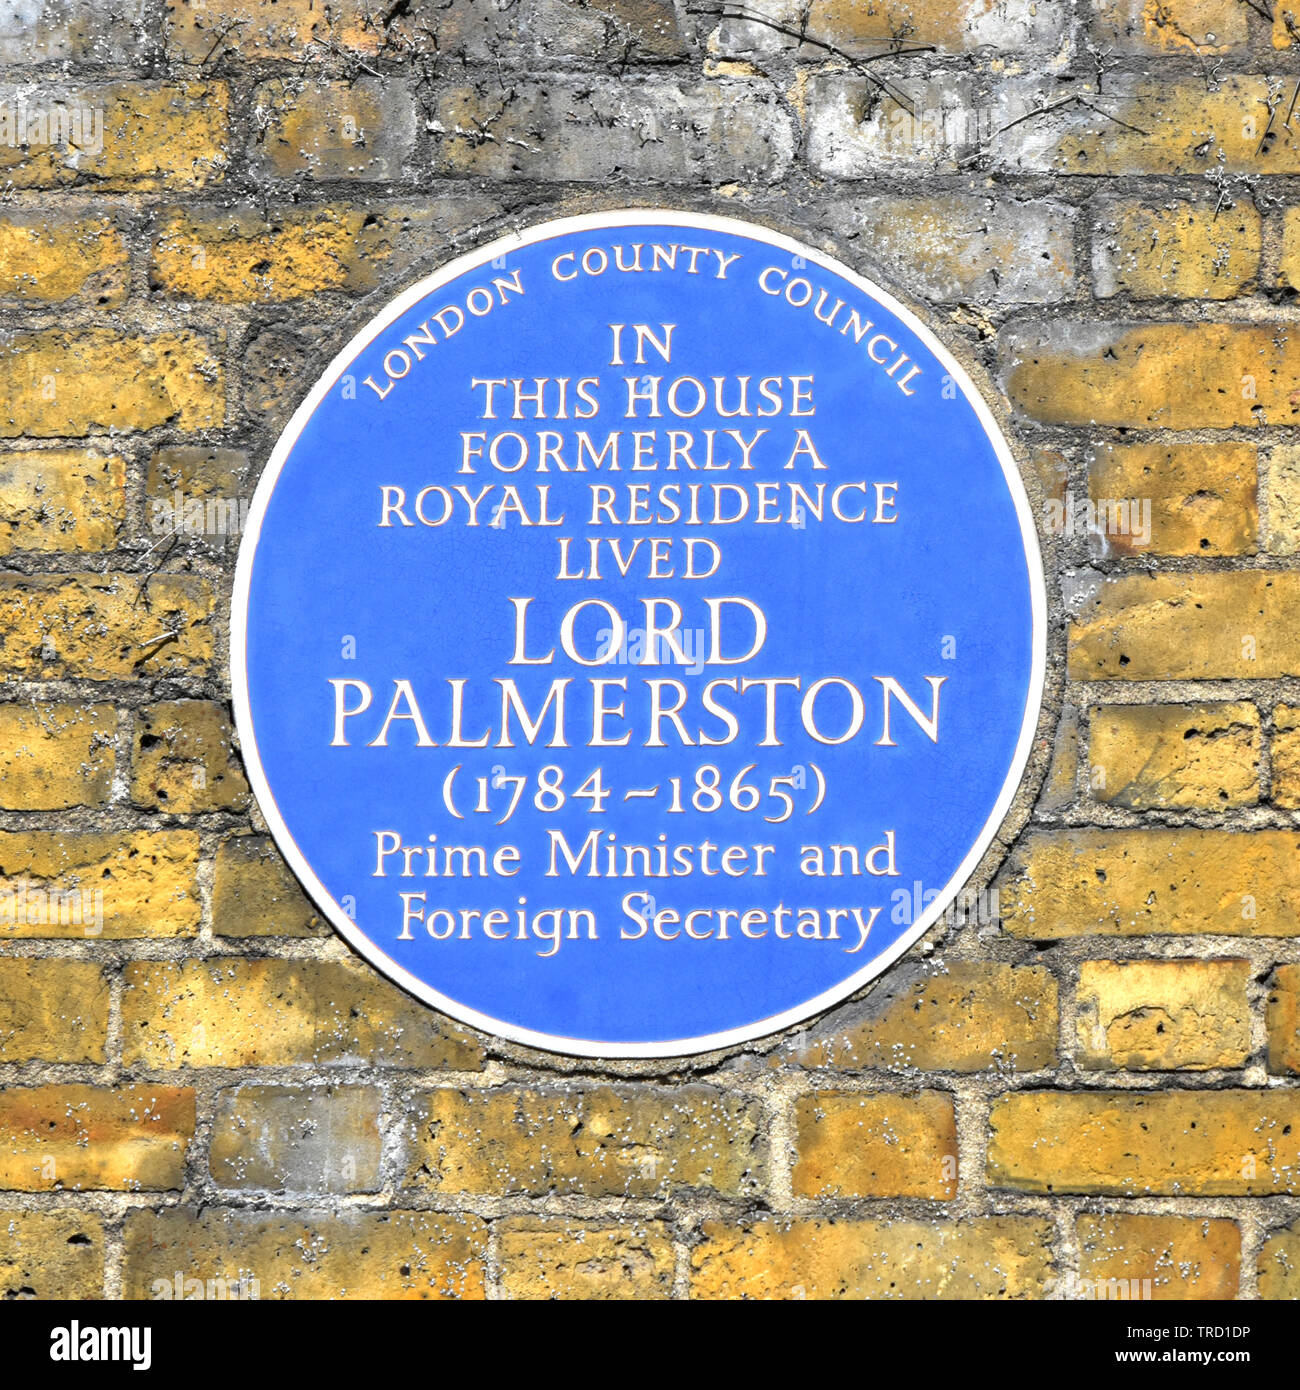 London County Council berühmte Leute blue brick wall Plaque an diesem Haus historische Ruhm von Premierminister Lord Palmerston London England UK gelebt Stockfoto